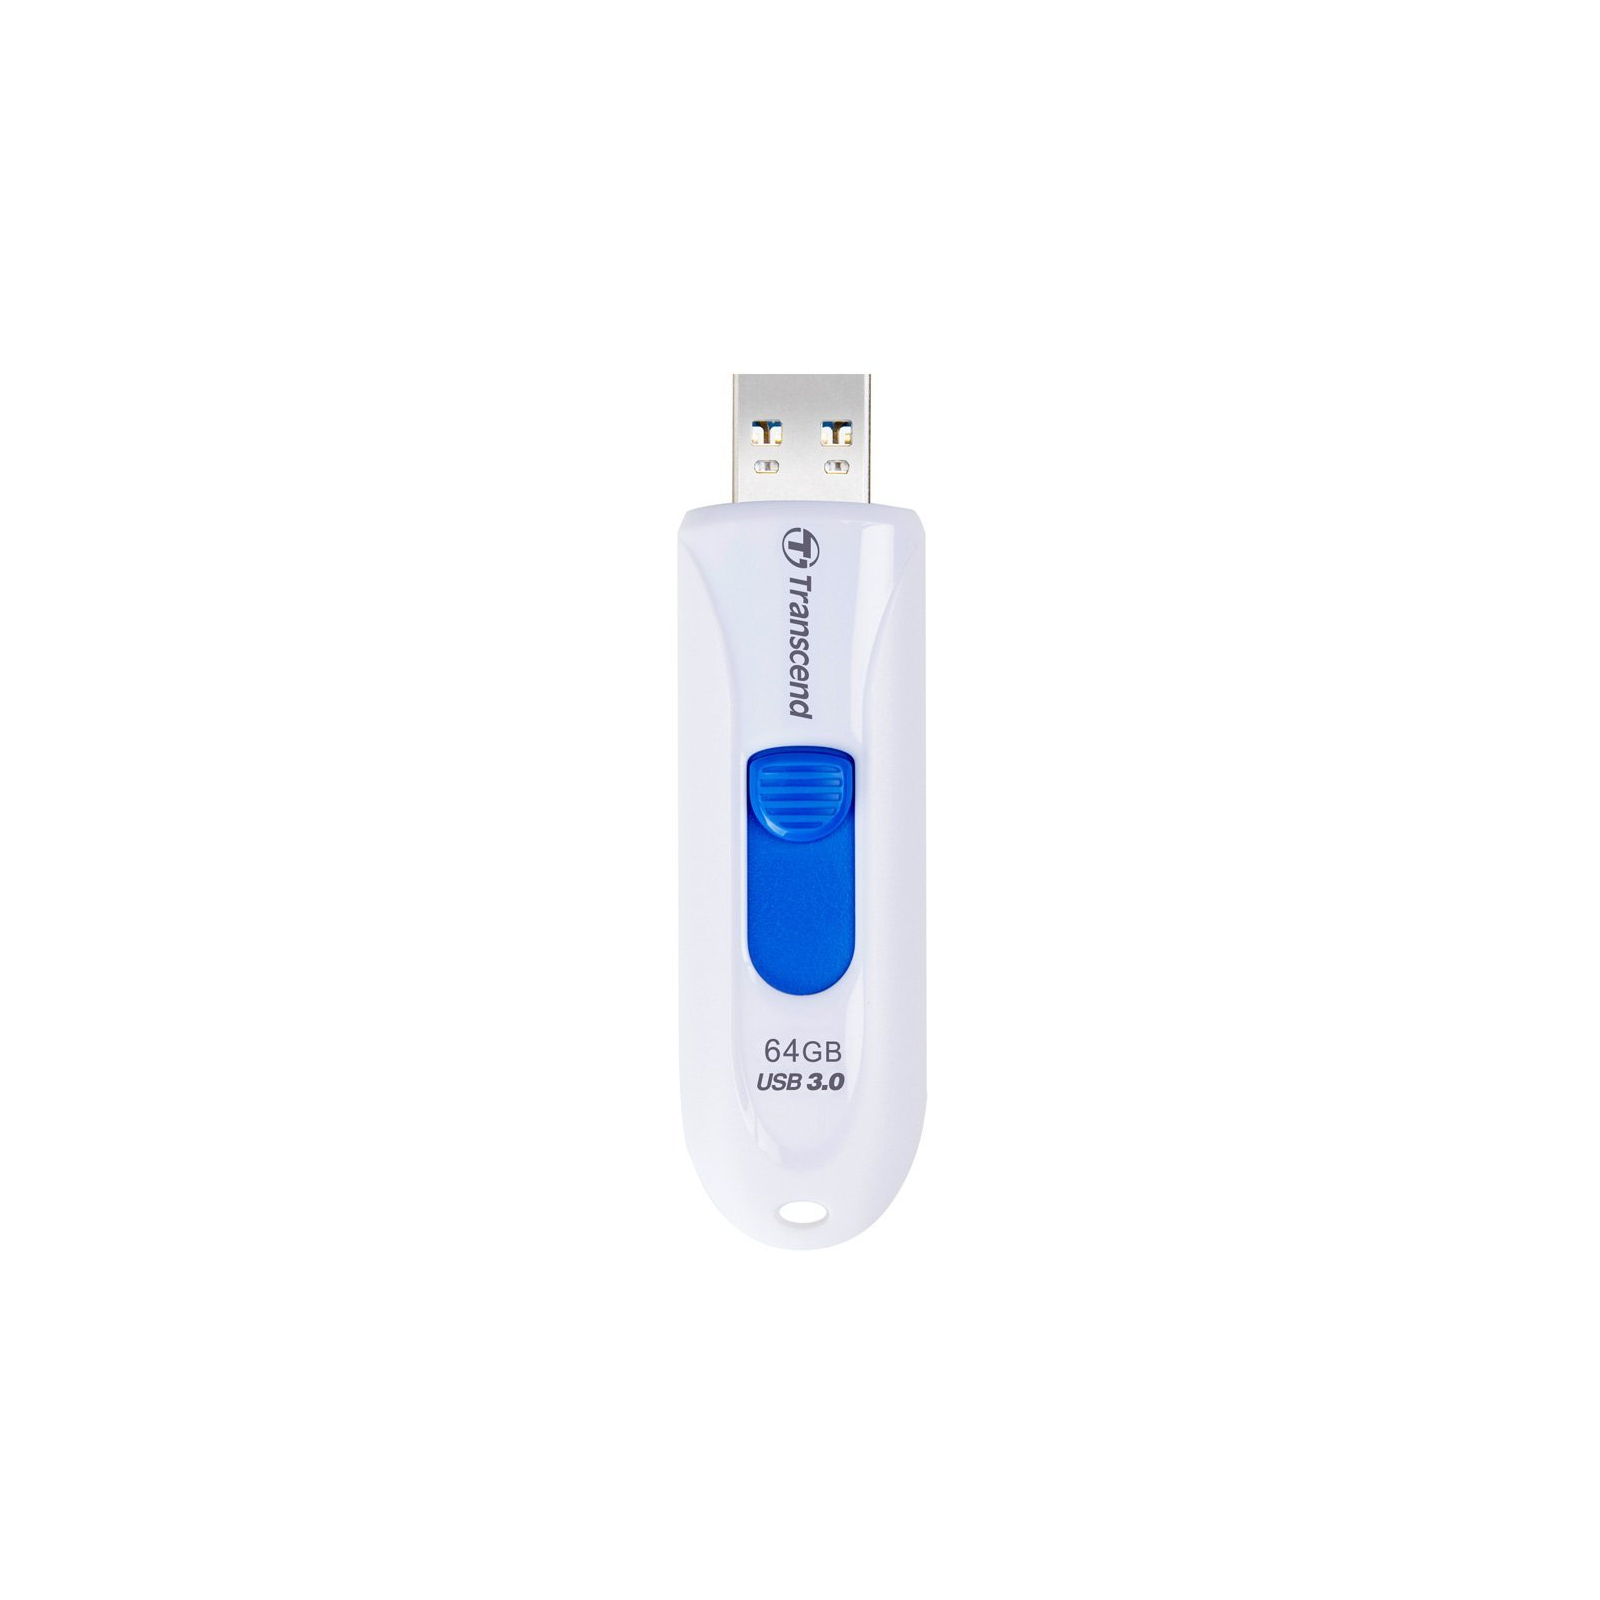 USB флеш накопитель Transcend 128GB JetFlash 790 White USB 3.0 (TS128GJF790W) изображение 2